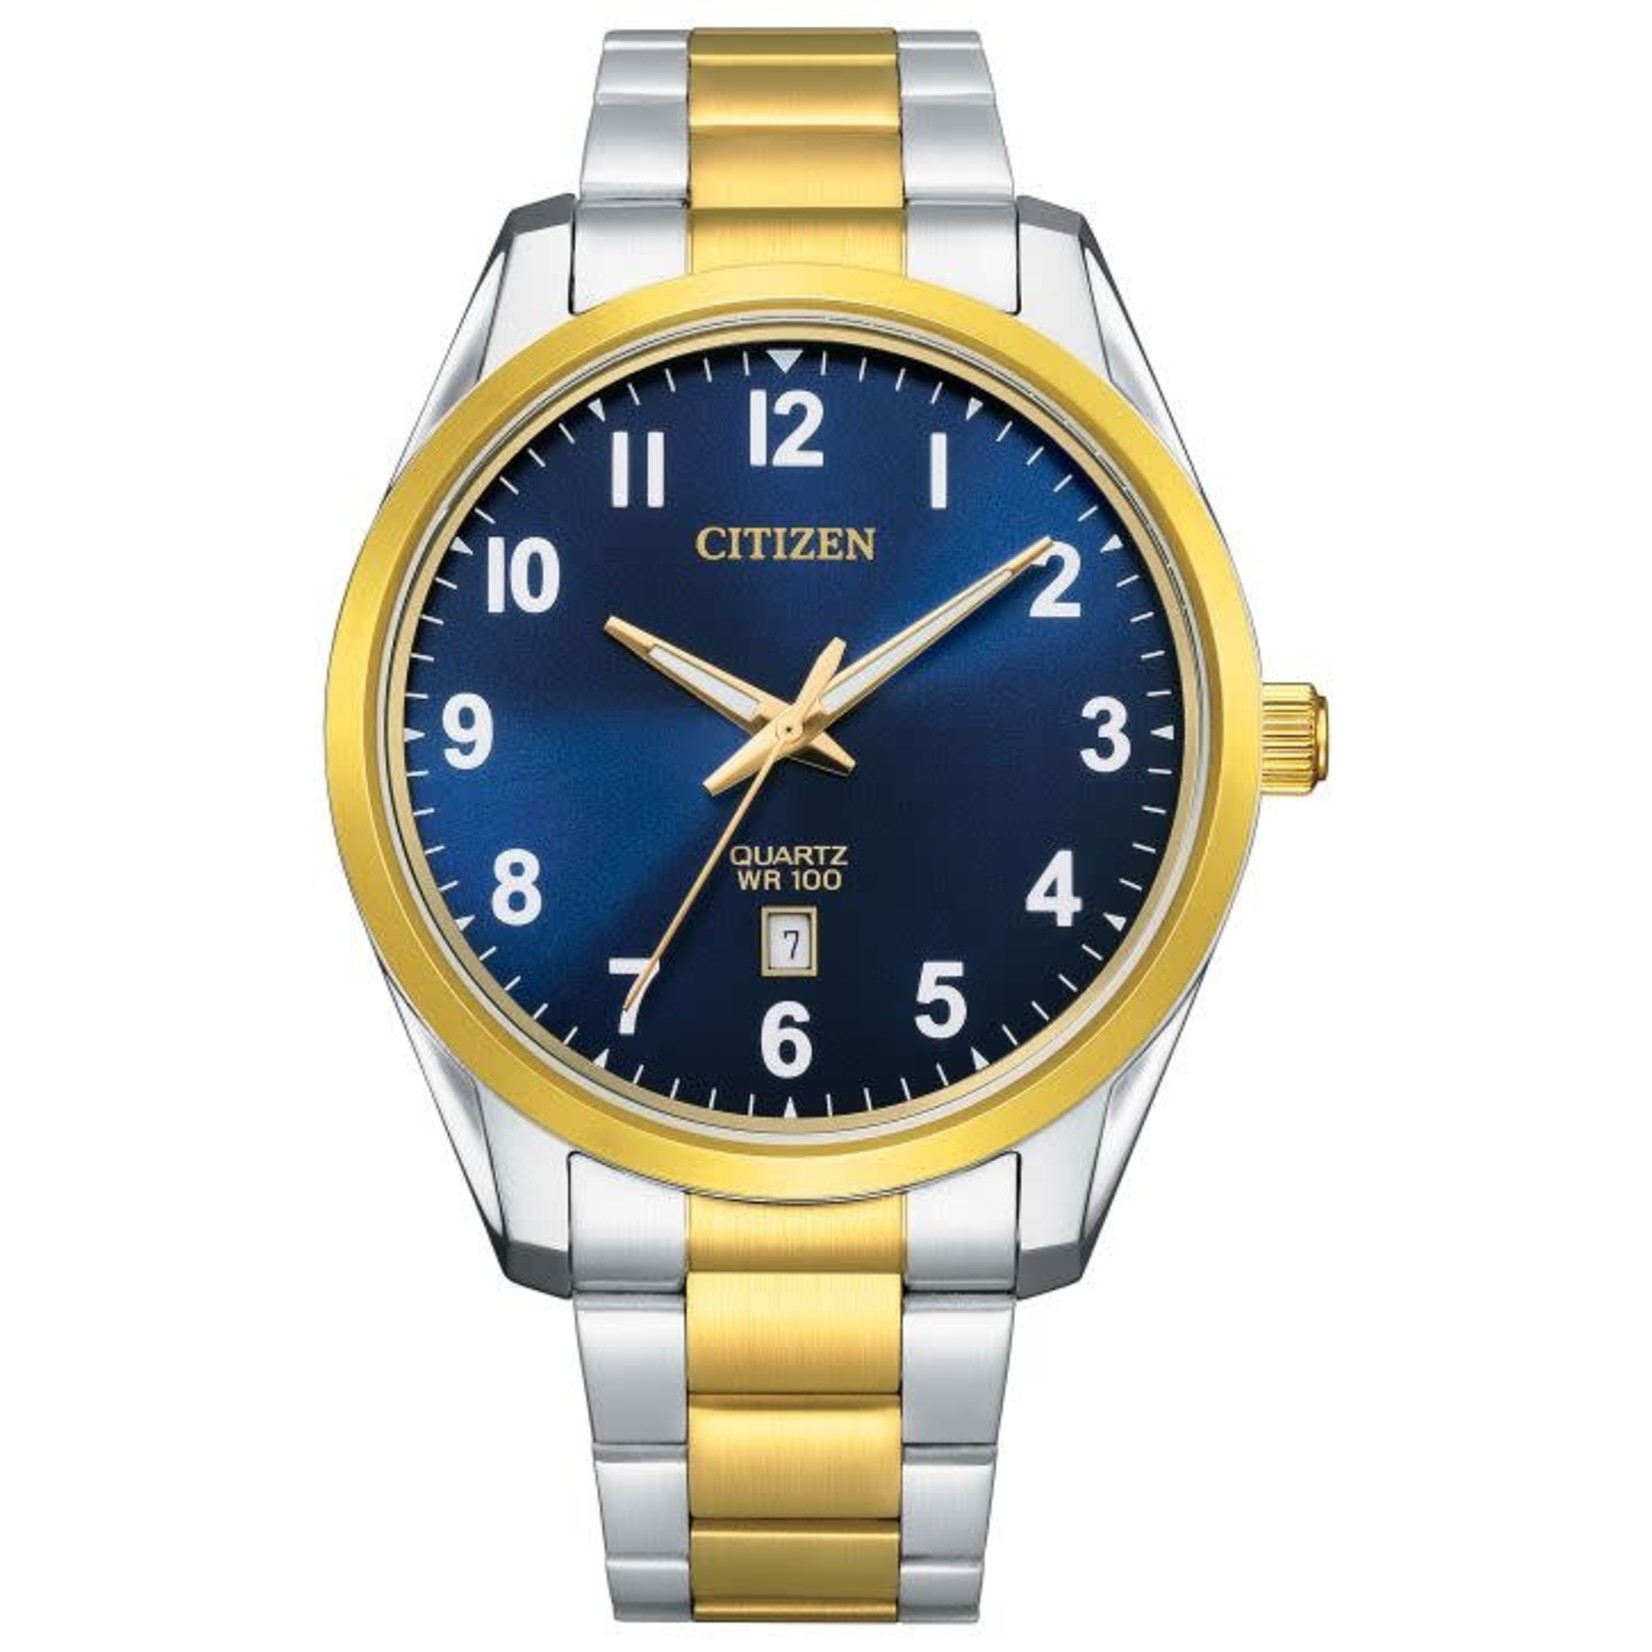 CITIZEN WATCH COMPANY Citizen Quartz Two Tone Blue Dial Watch w/Date